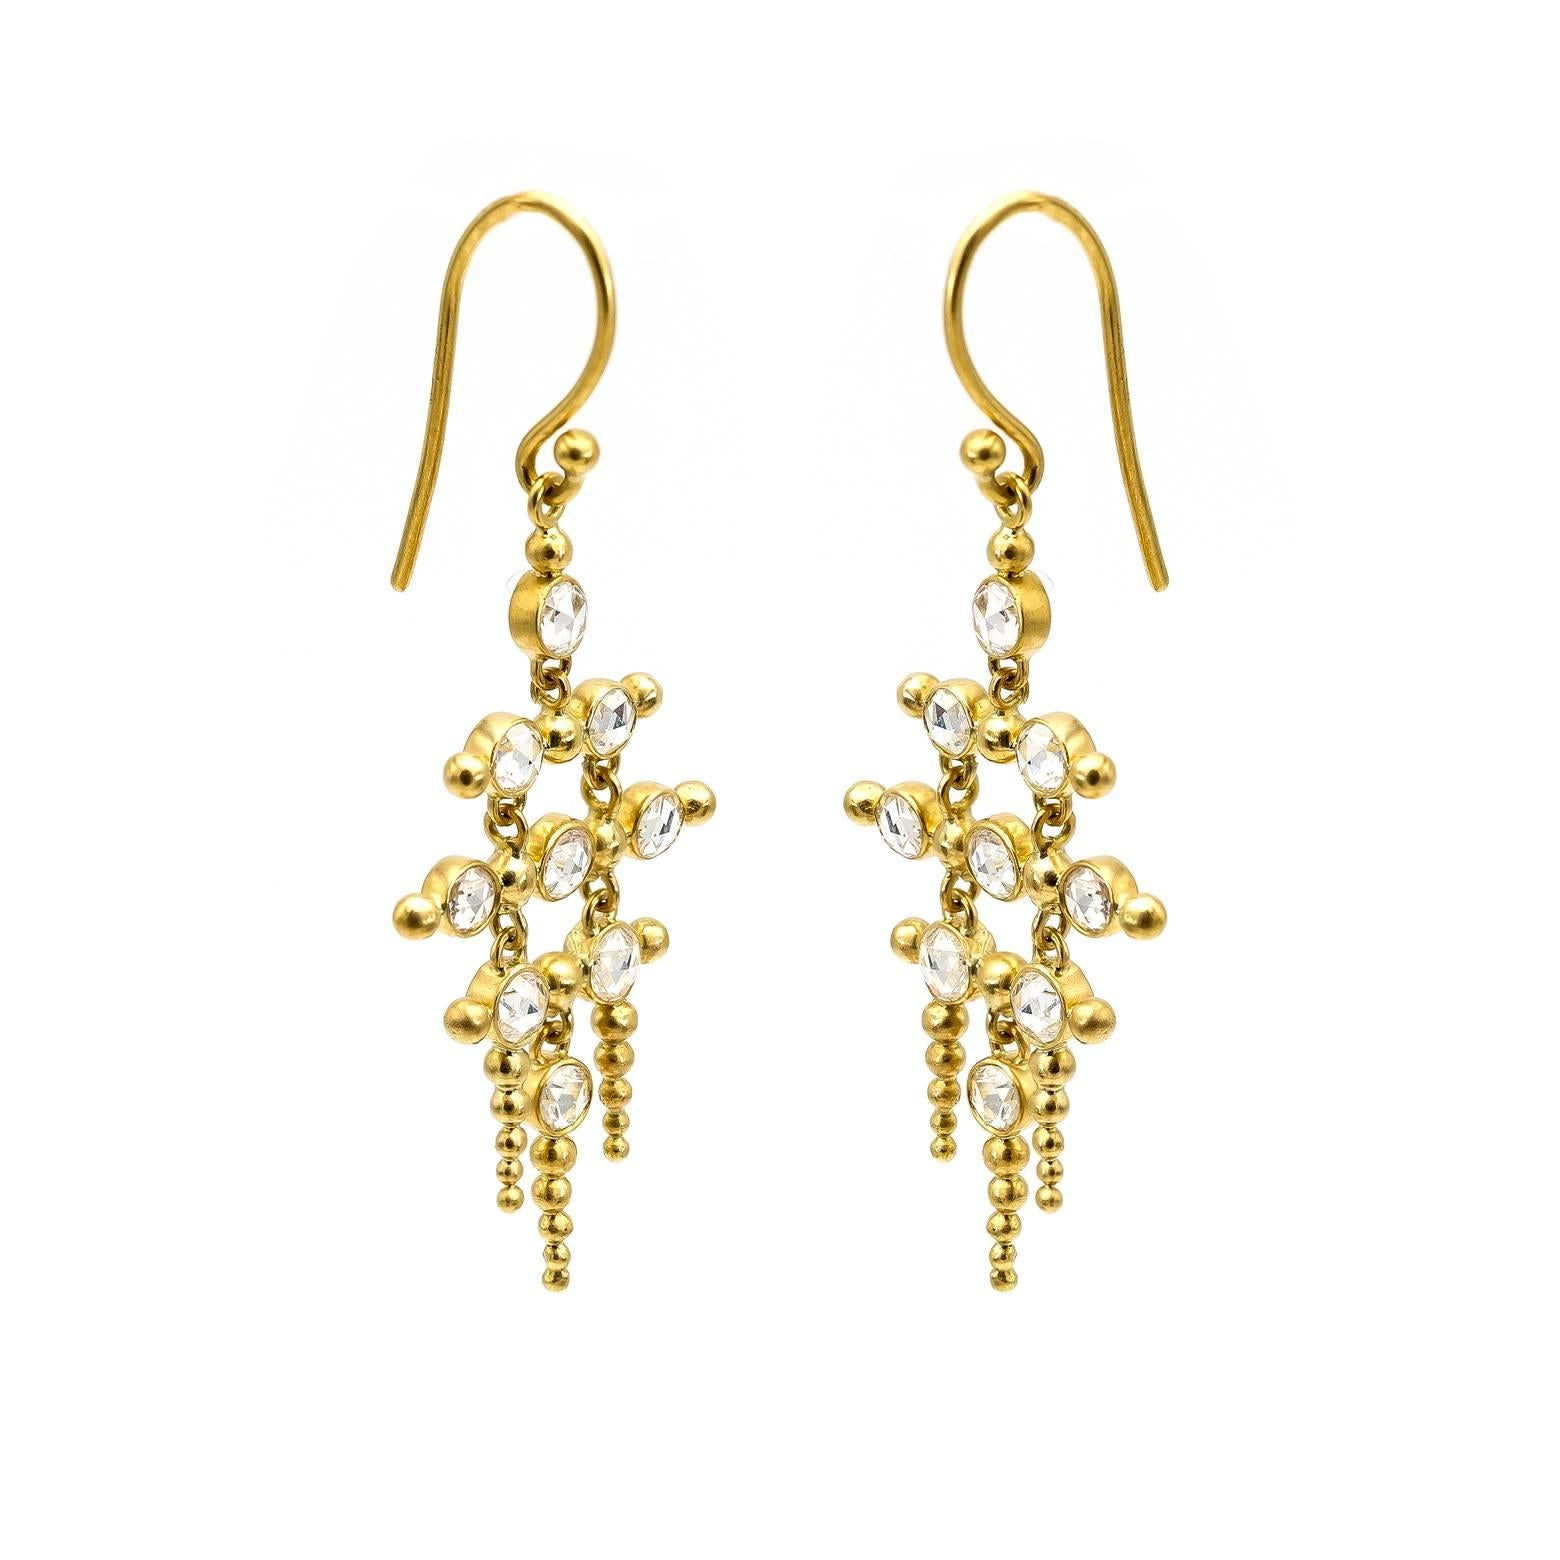 Modern Round Rose Cut Diamond Gold Chandelier Earrings with Gold Pillars